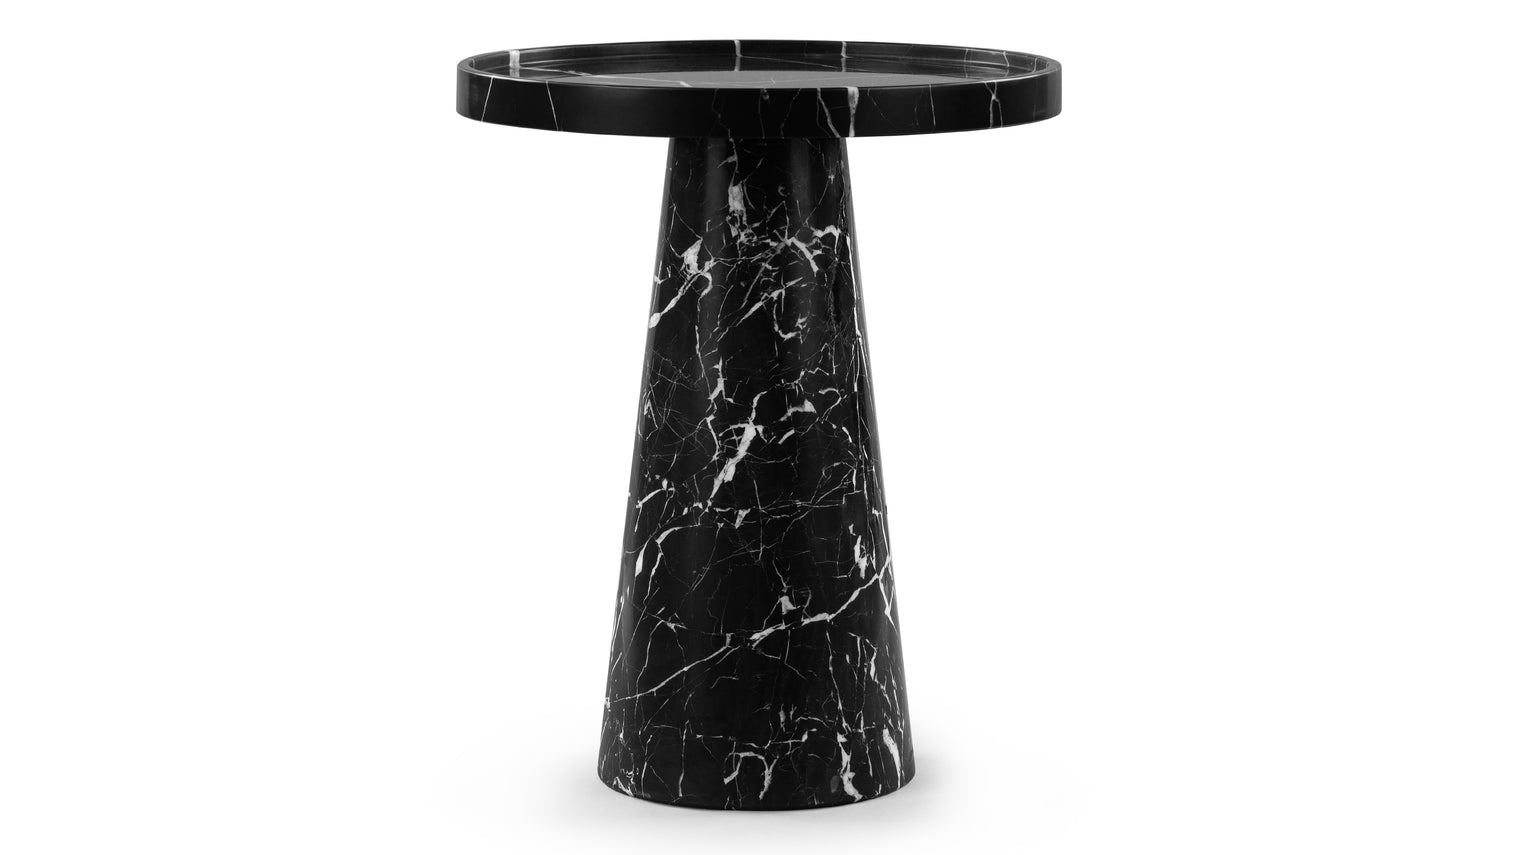 Roc - Roc Side Table, Black Marble